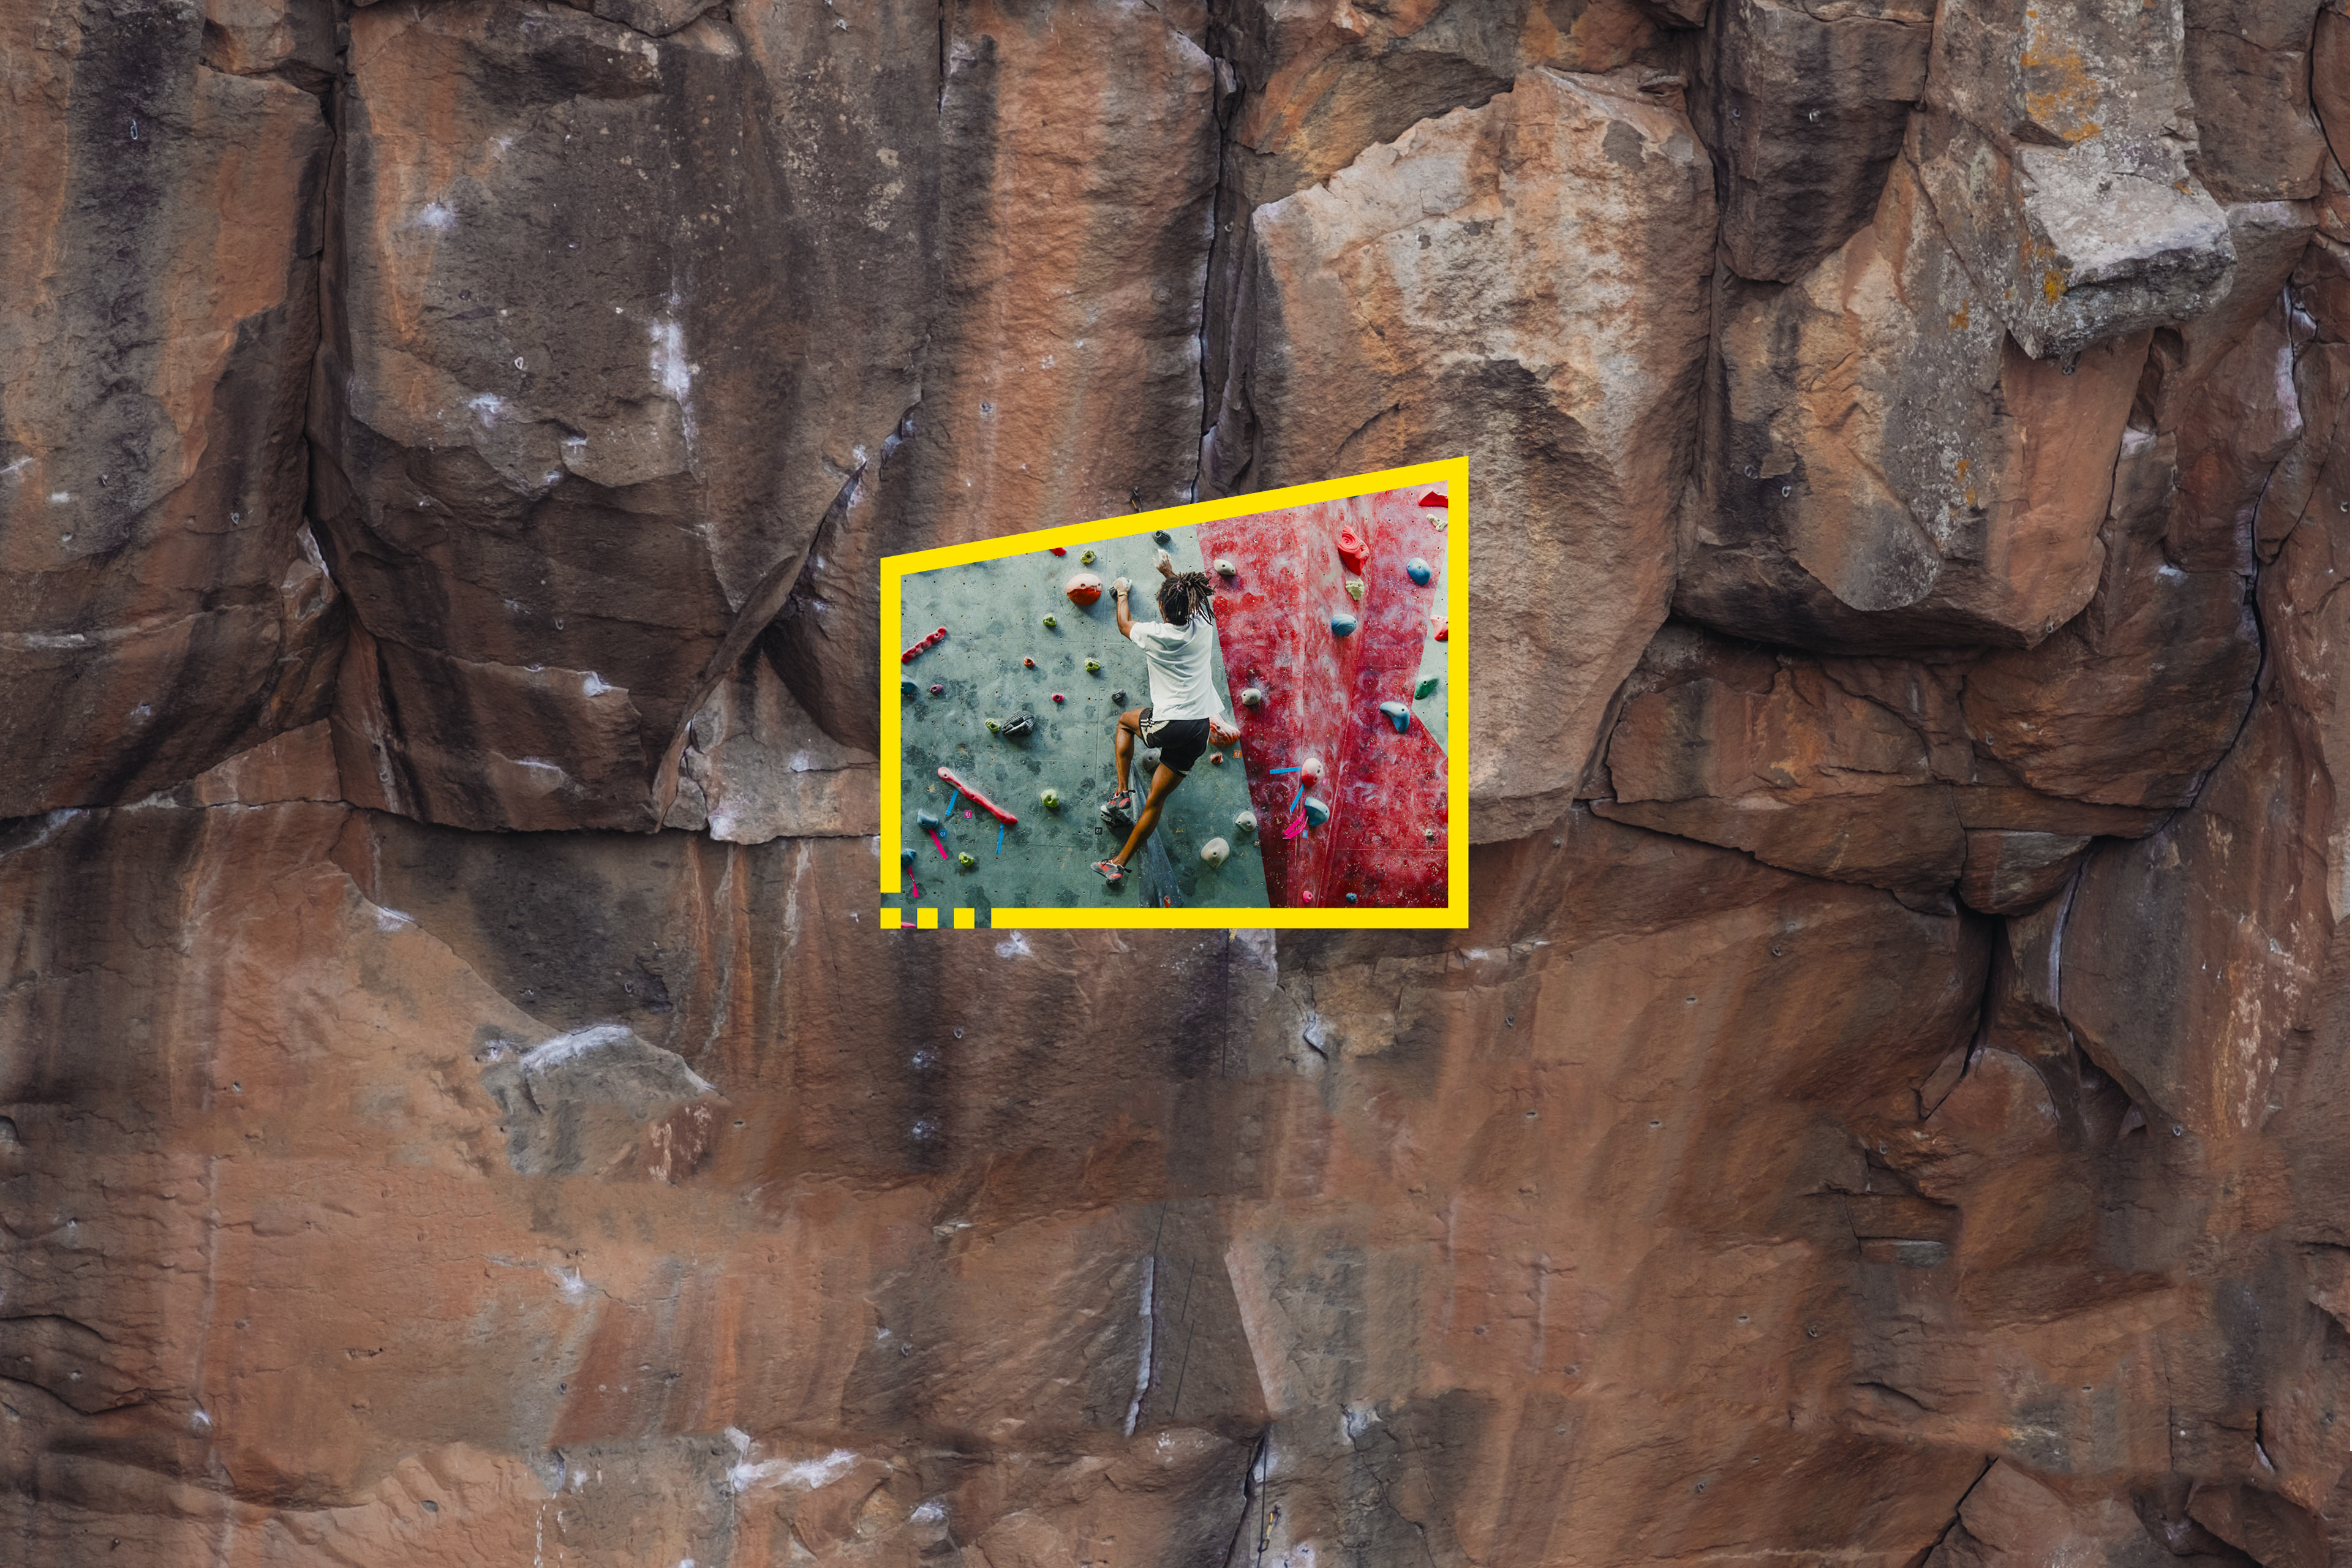 Reframe your future rock climber